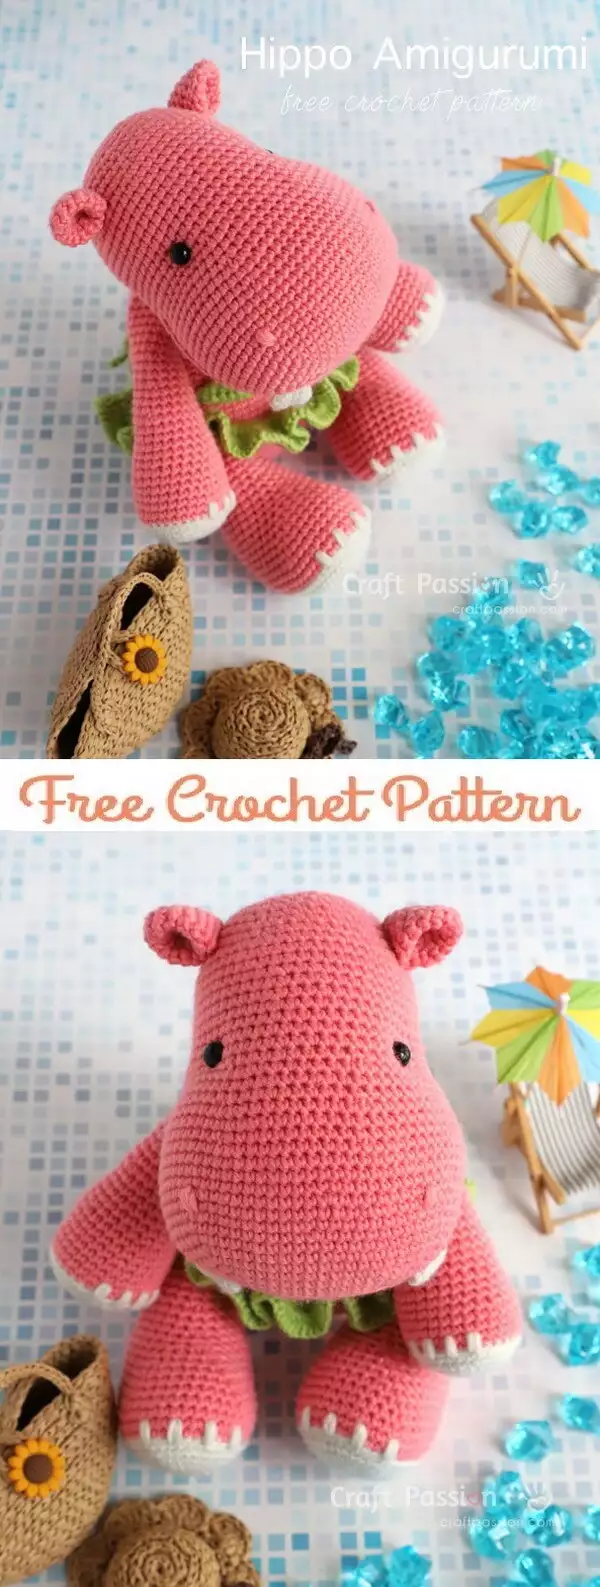 Hippo Amigurumi Crochet Free Pattern